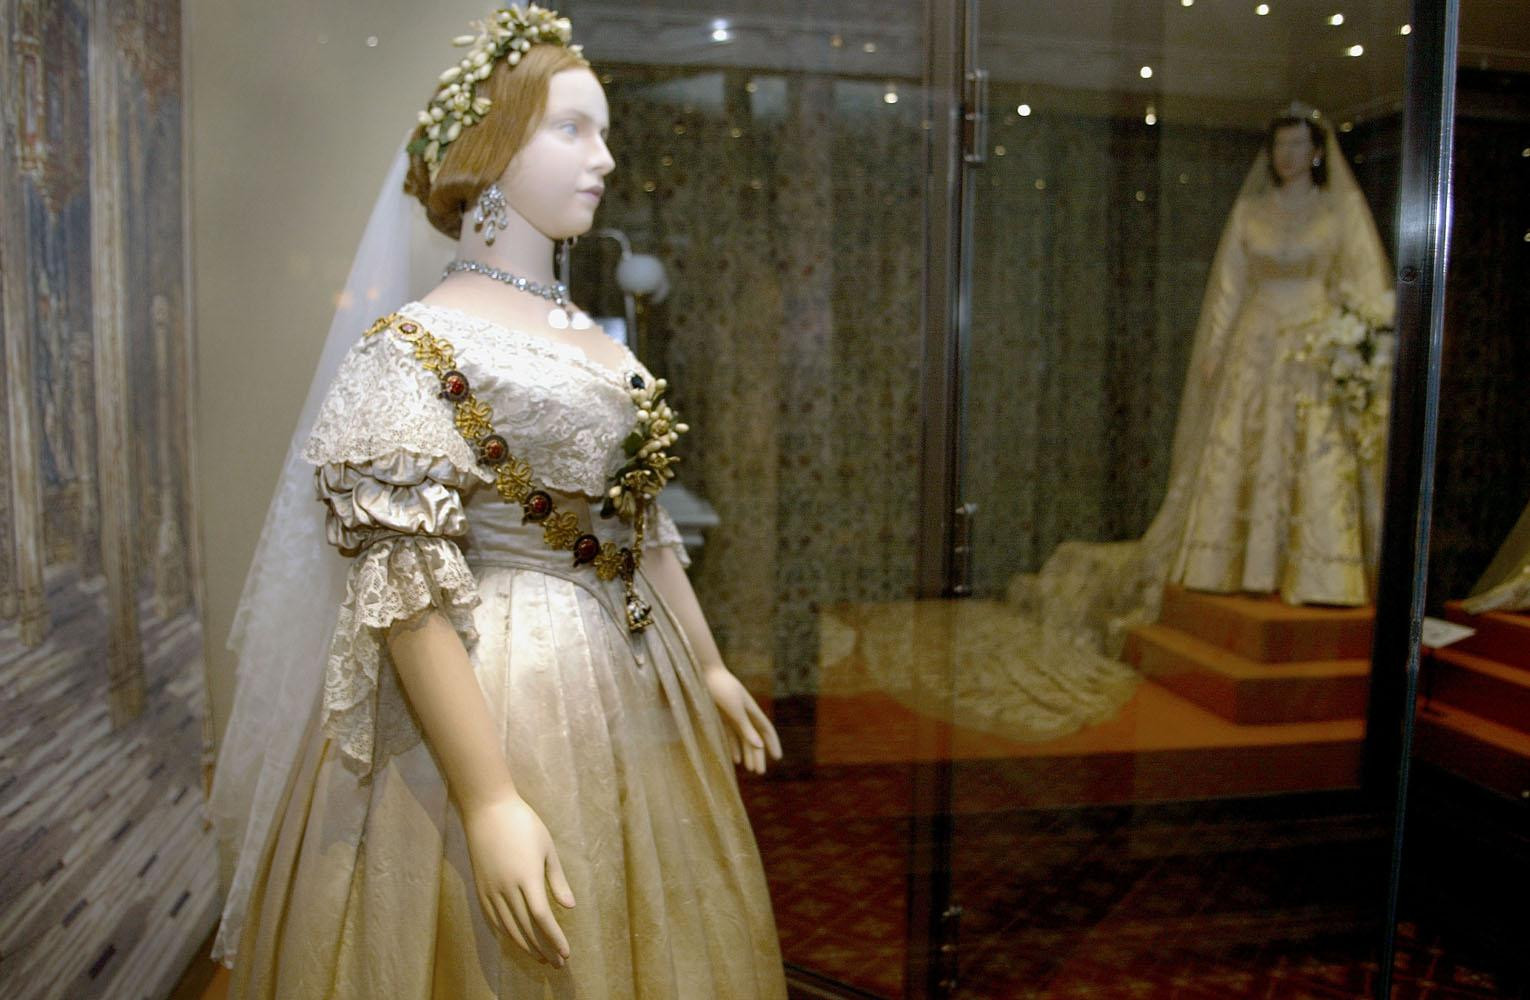 Royal wedding dress: Best pop culture wedding gowns